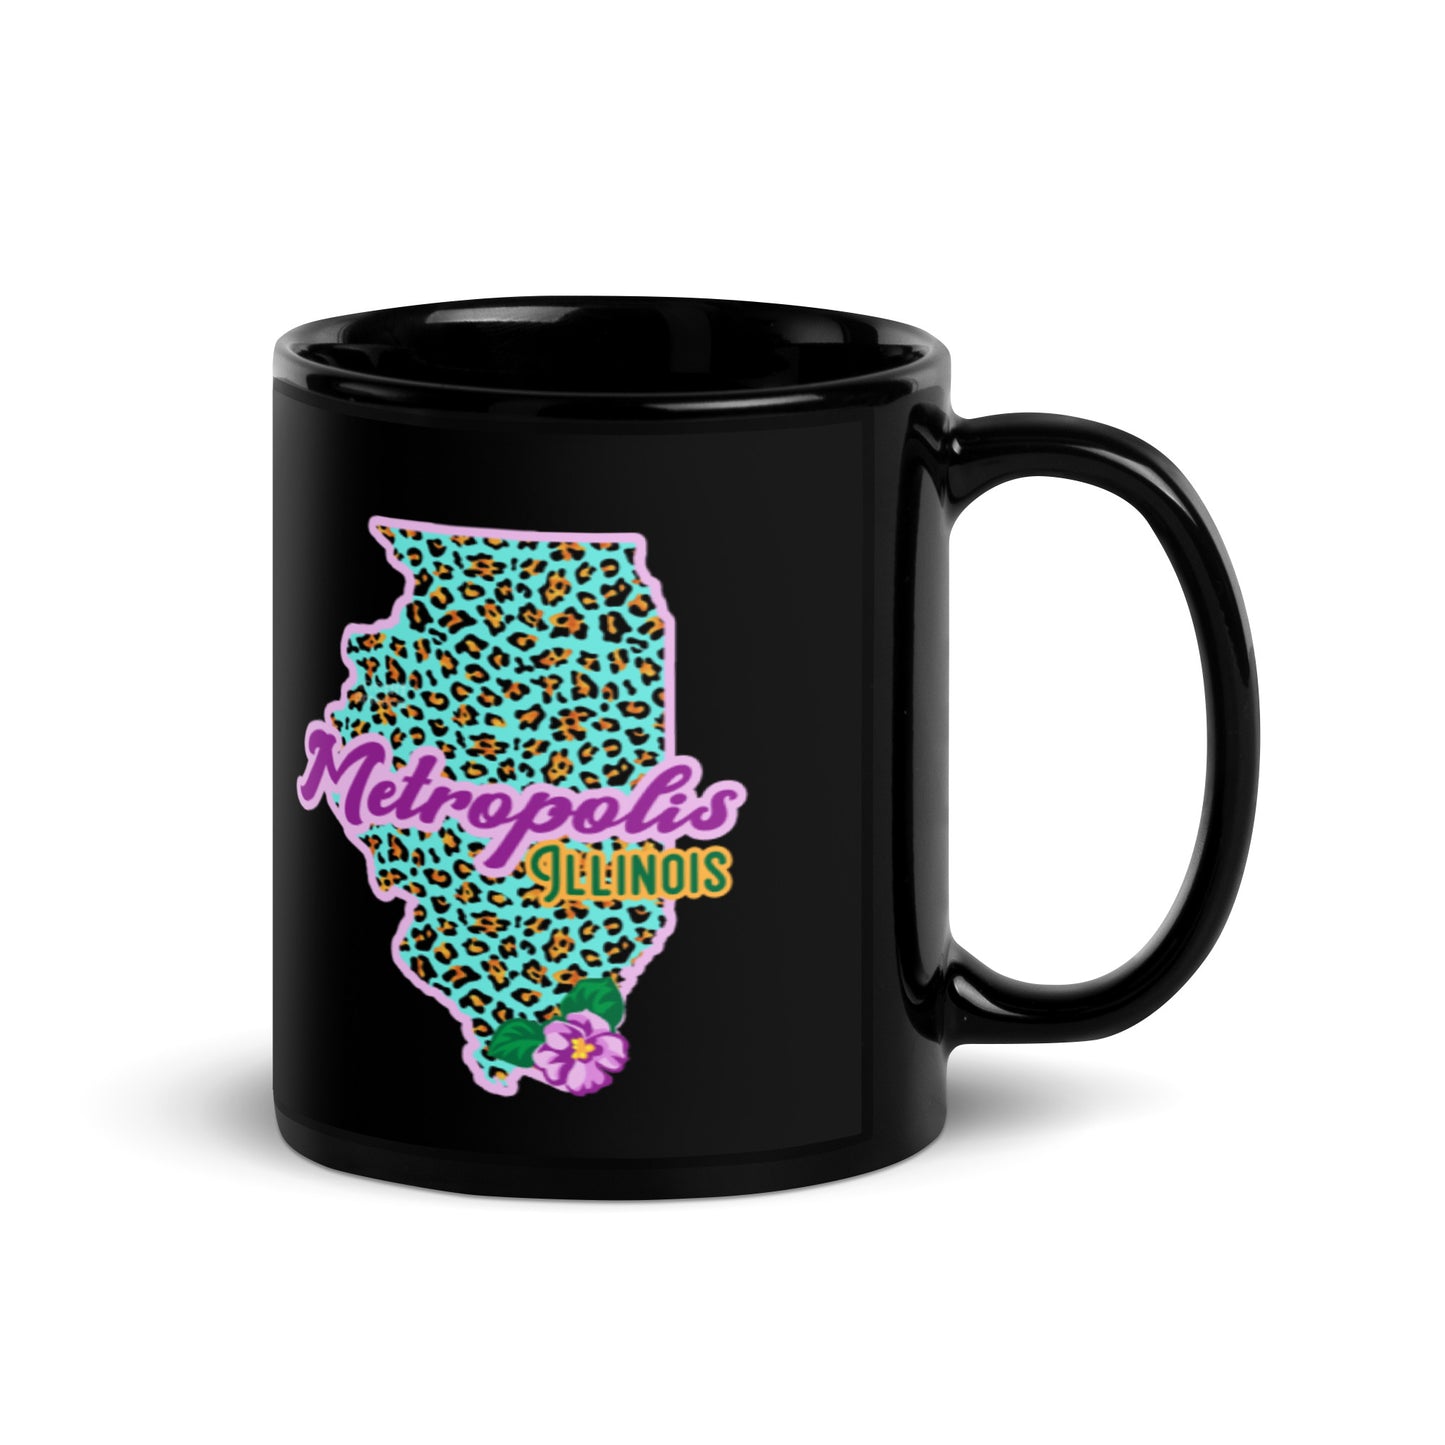 Metropolis Illinois State Flower over Leopard Print on Black Glossy Mug